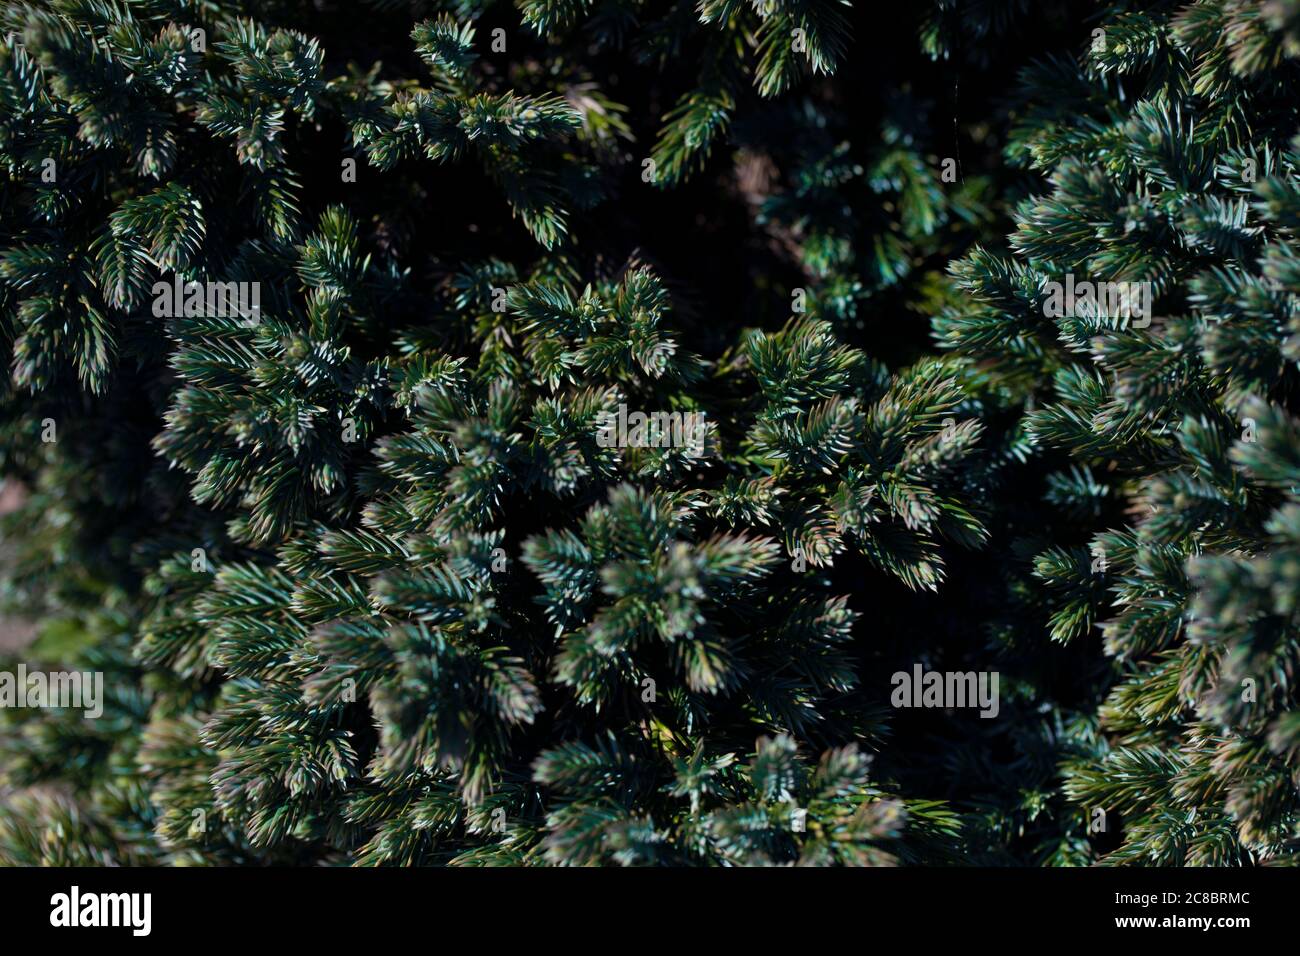 Flaky Juniper Blue Star tree evergreen coniferous branch texture green needle Stock Photo